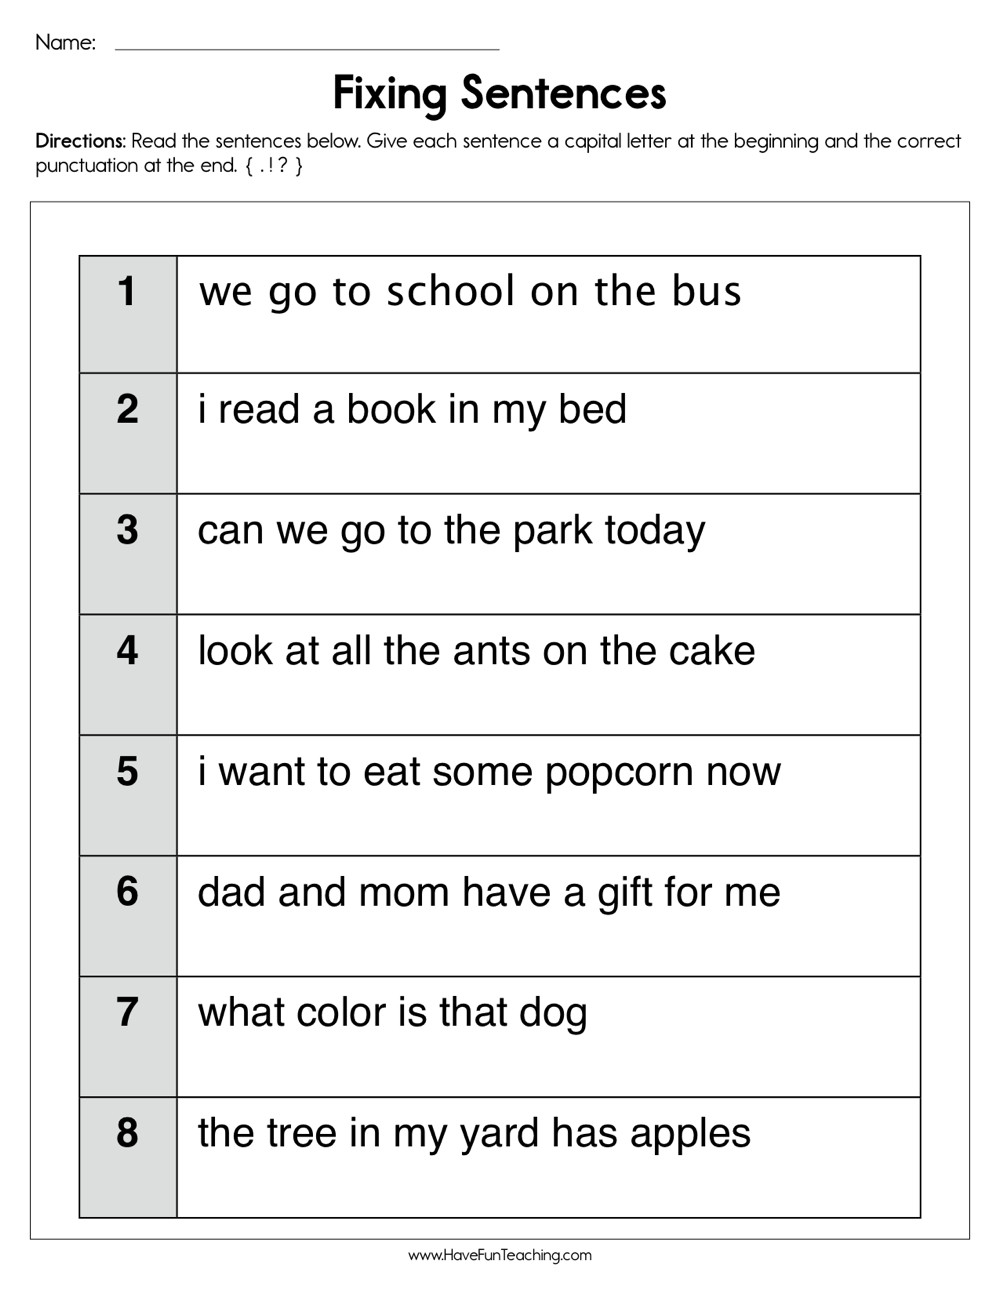 Editing Sentences 3rd Grade Fixing Sentences Worksheet